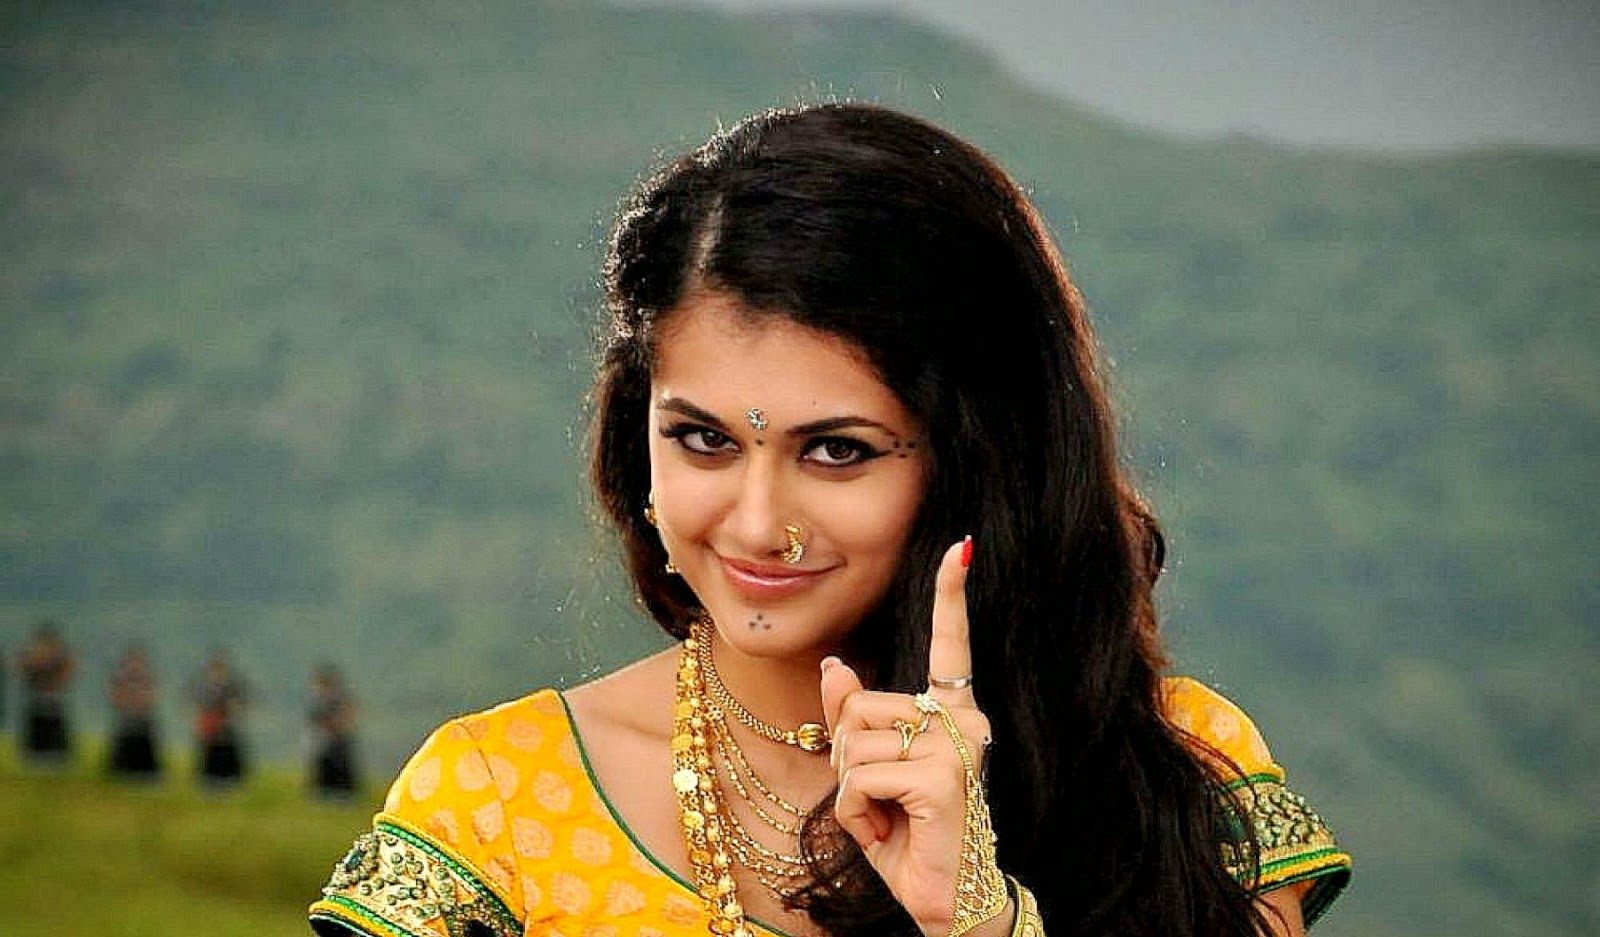 fondo de pantalla hd actriz tamil,sonrisa,fotografía,cabello negro,sesión de fotos,contento